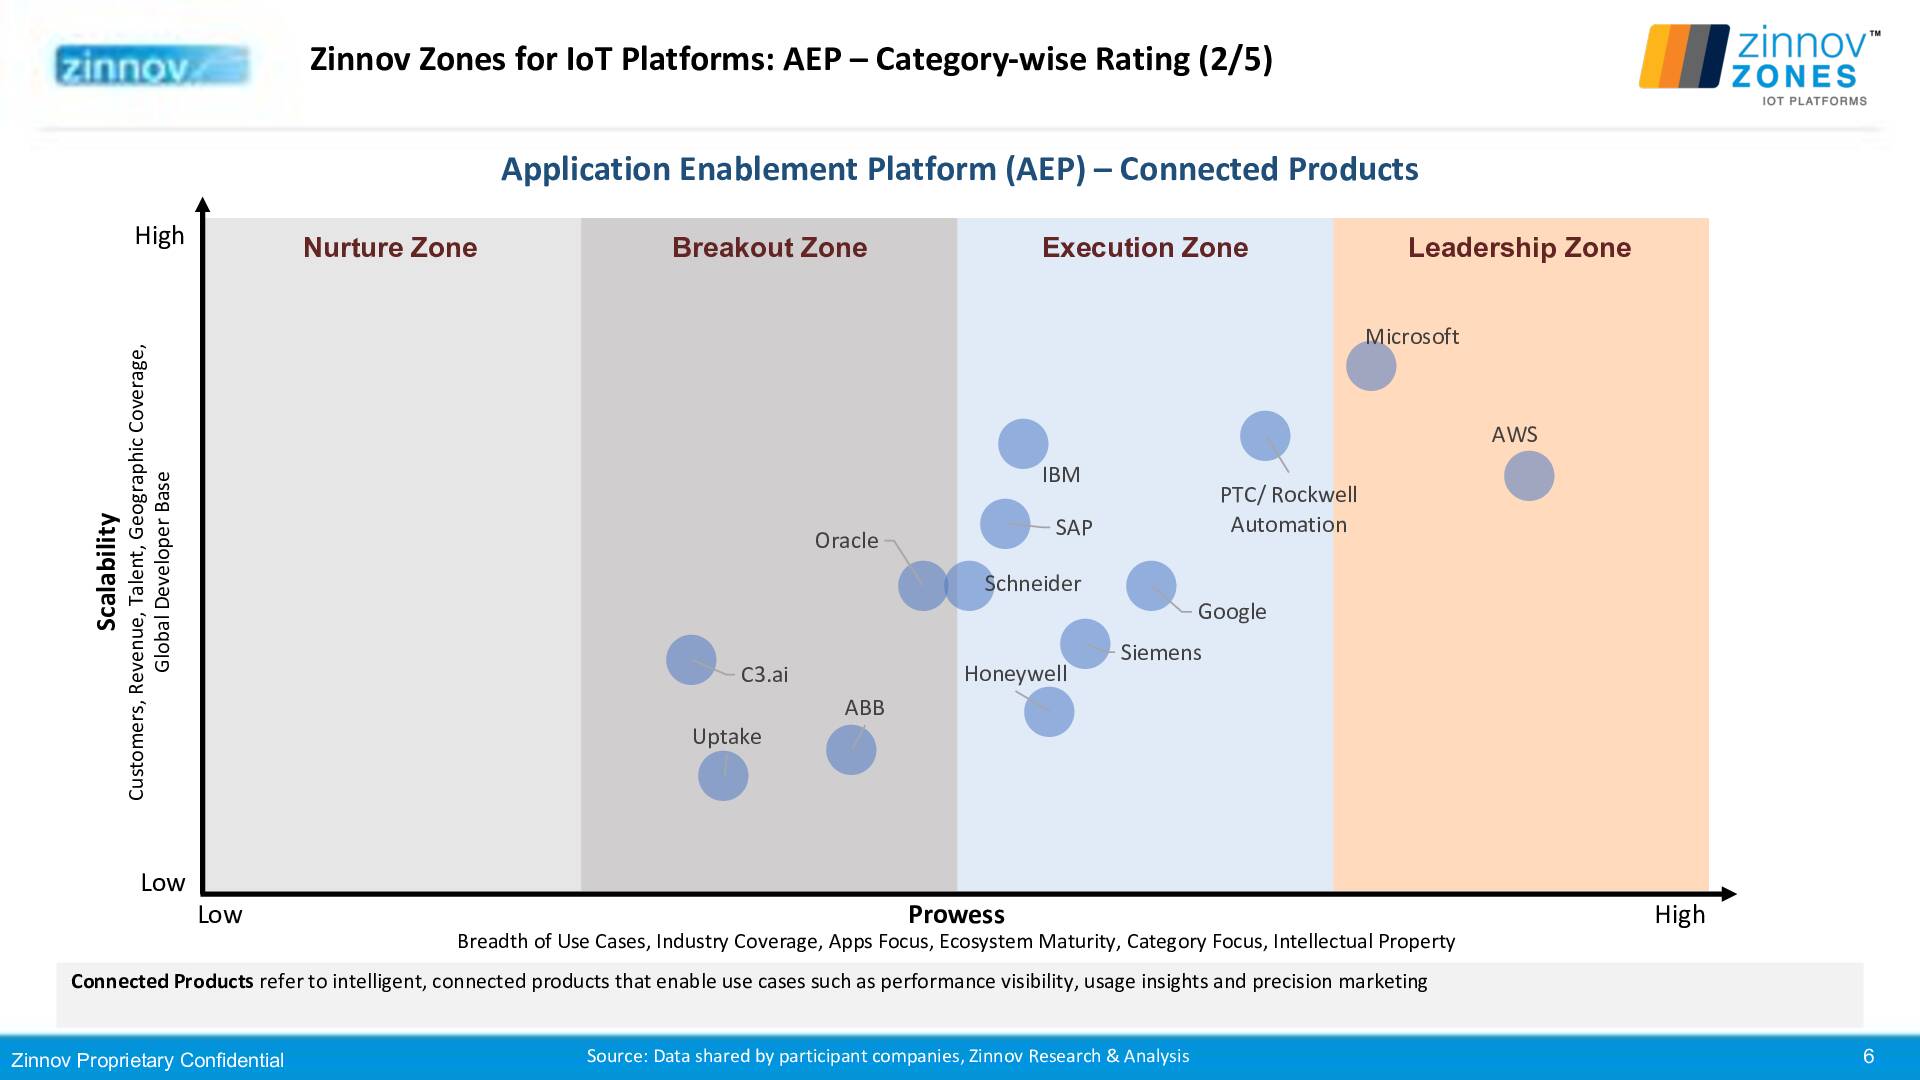 Zinnov Zones Iot Platform 2019 Ratings Revised 24sep20196